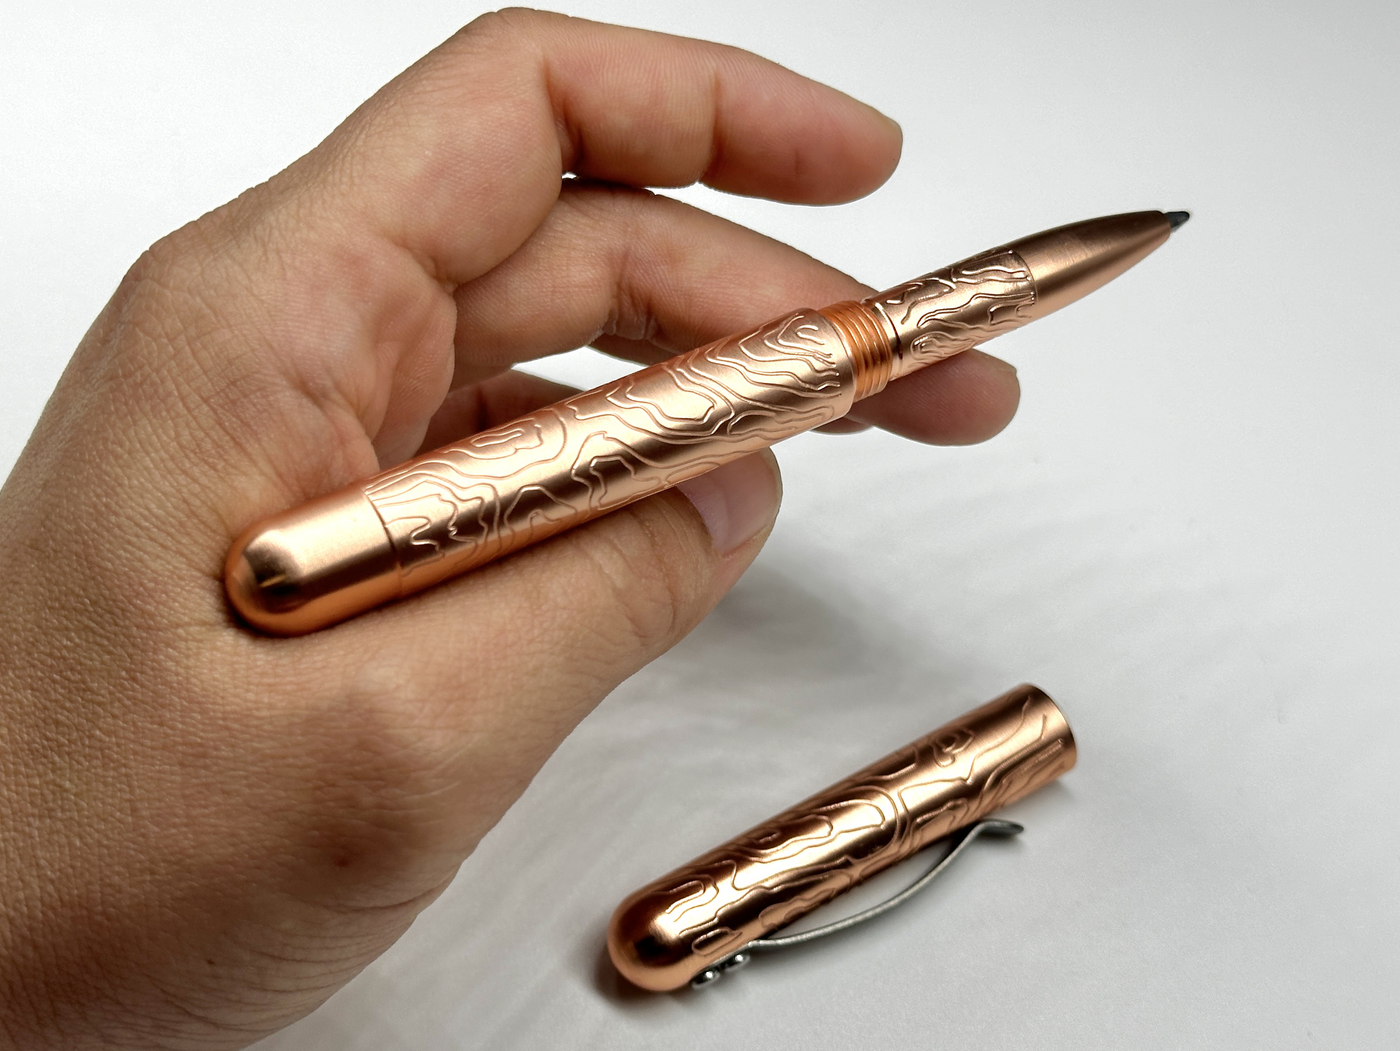 Copper Embassy Pen - Gen 3 ( New )